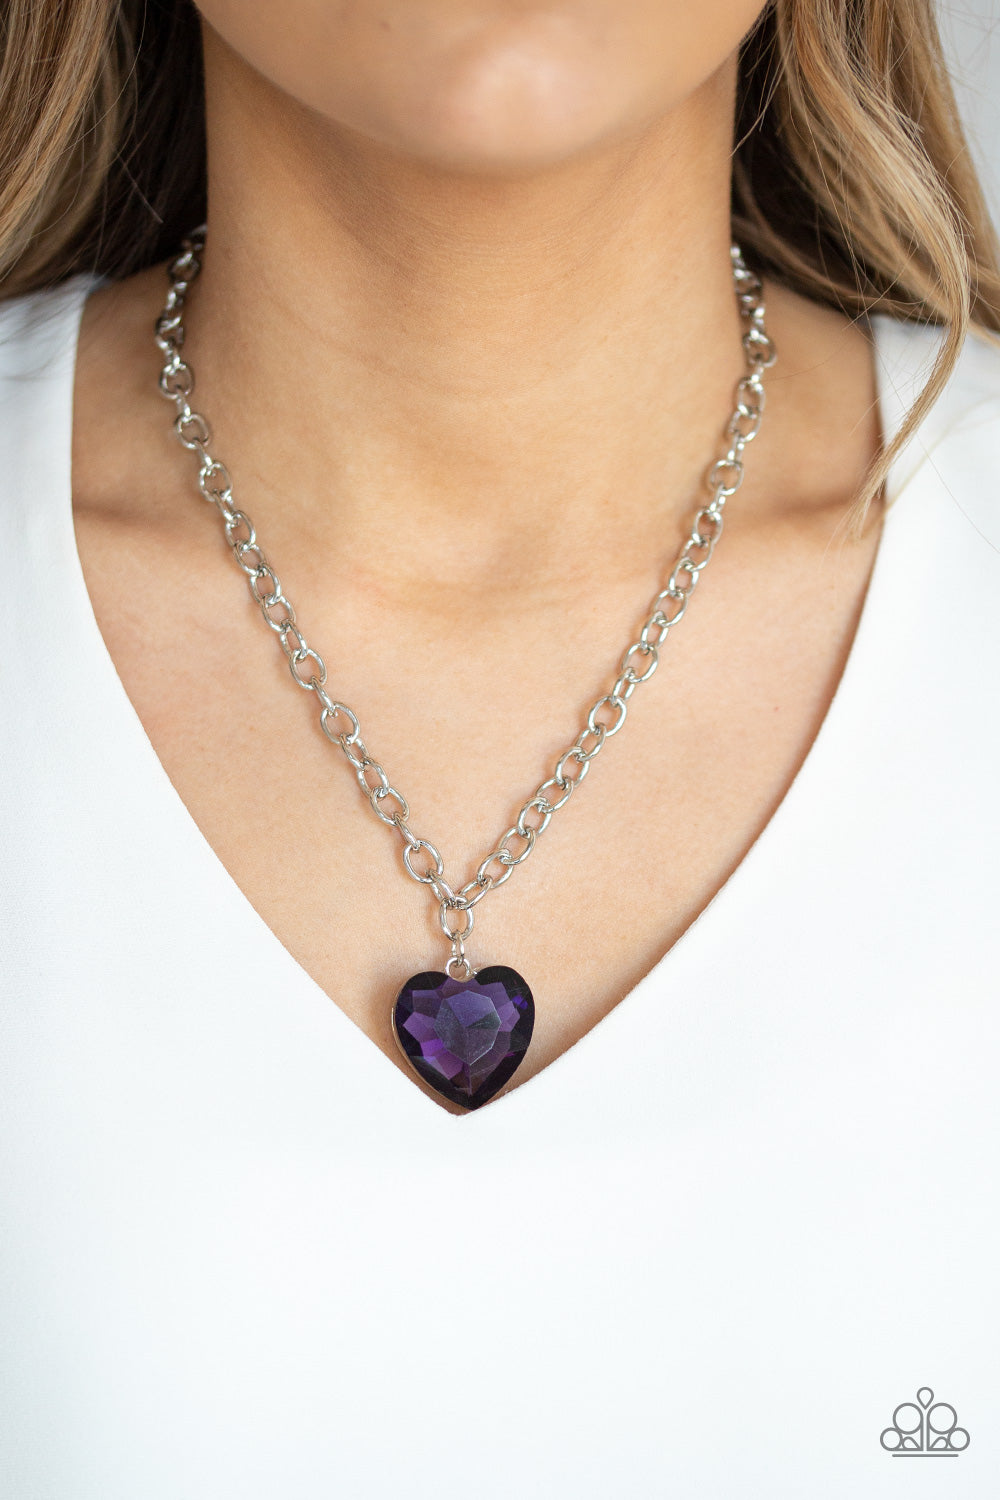 Flirtatiously Flashy Purple Necklace - Daria's Blings N Things